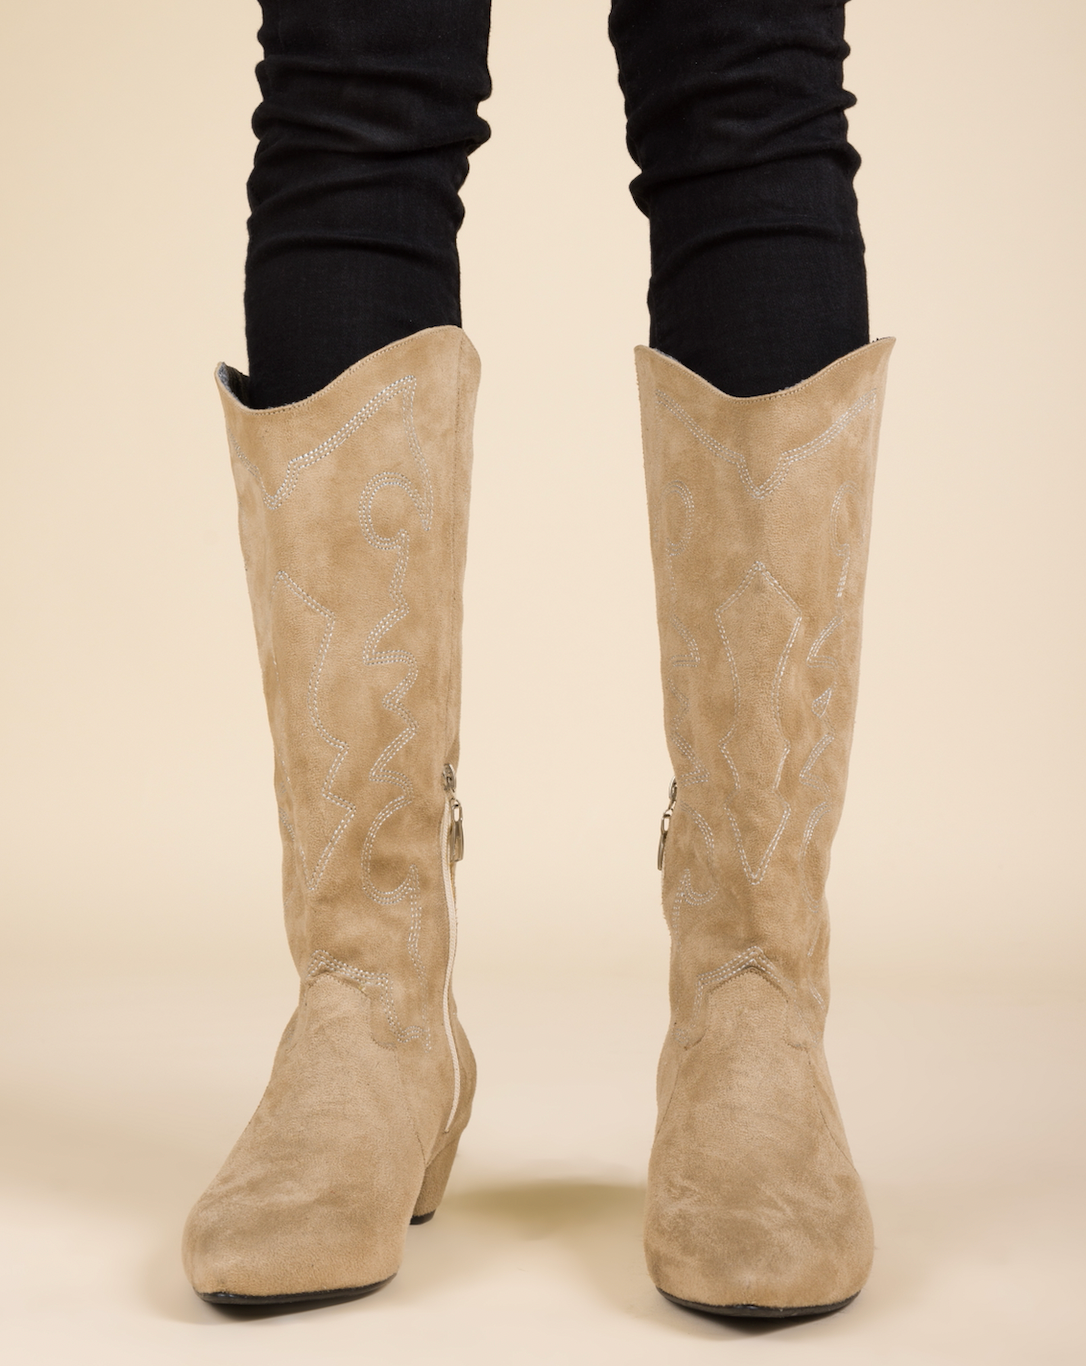 Detalles Suede Cowgirl Boots - BEIGE